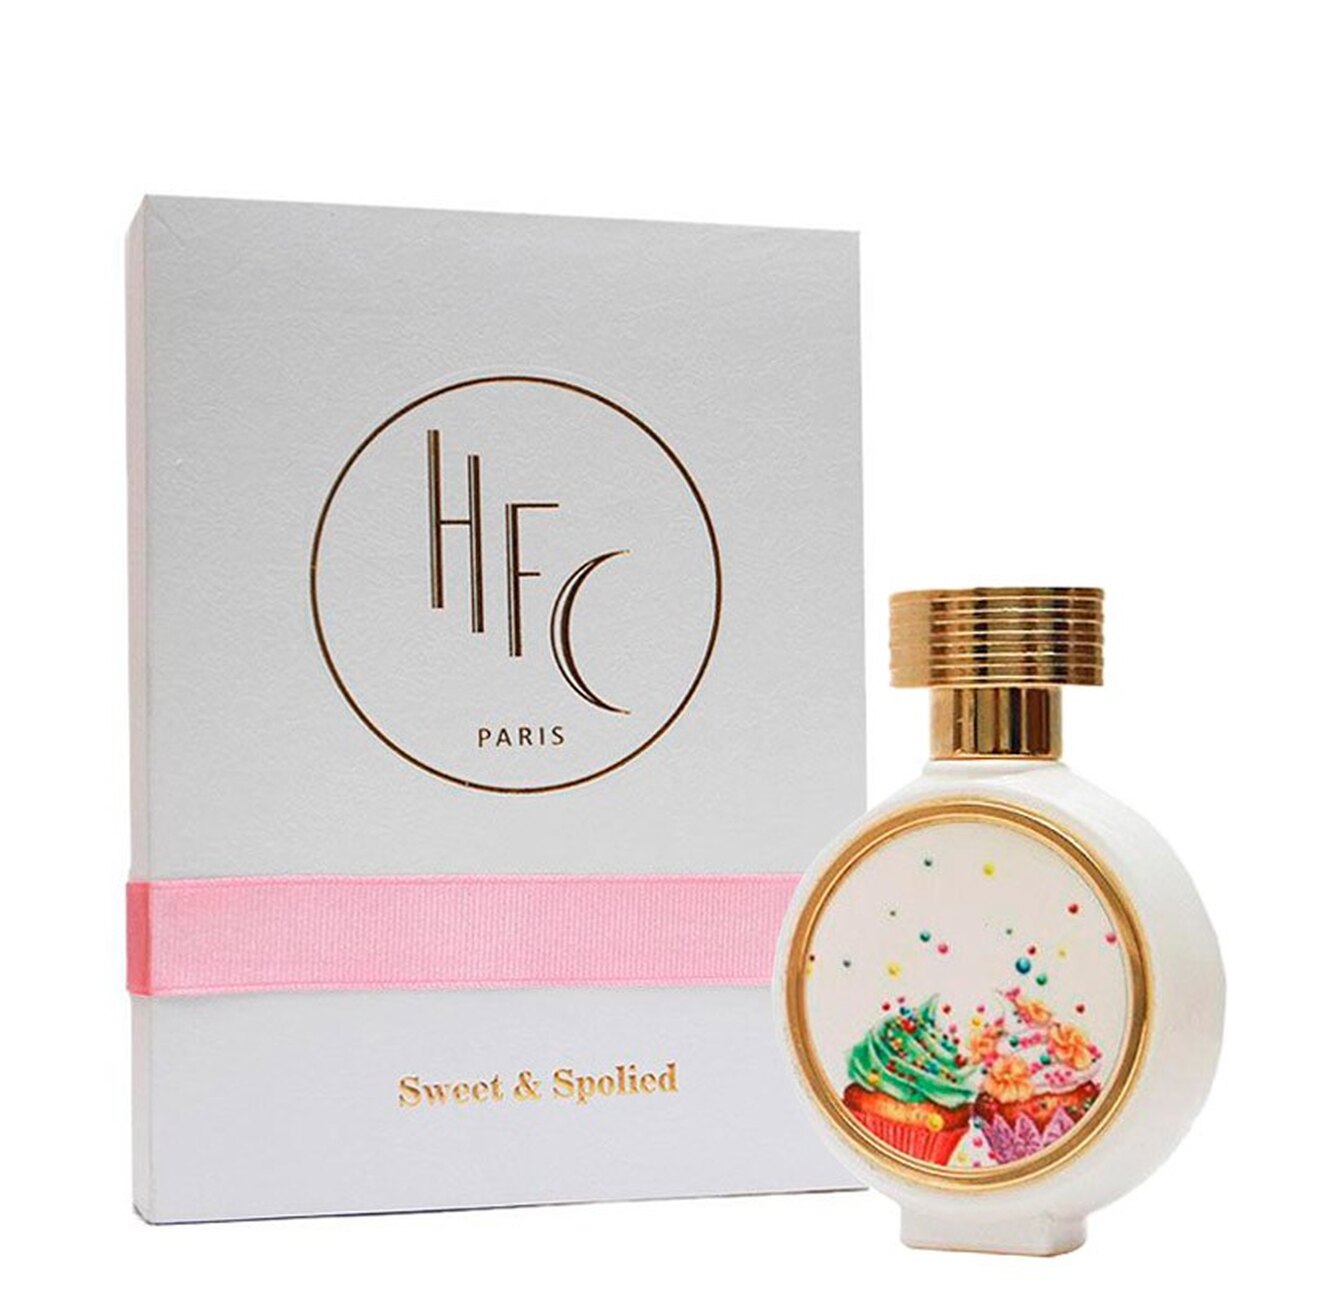 Hfc парфюм отзывы. Sweet spoiled HFC Парфюм. HFC духи 7,5 мл. Haute Fragrance Company Sweet & spoiled. HFC Haute Fragrance Company.